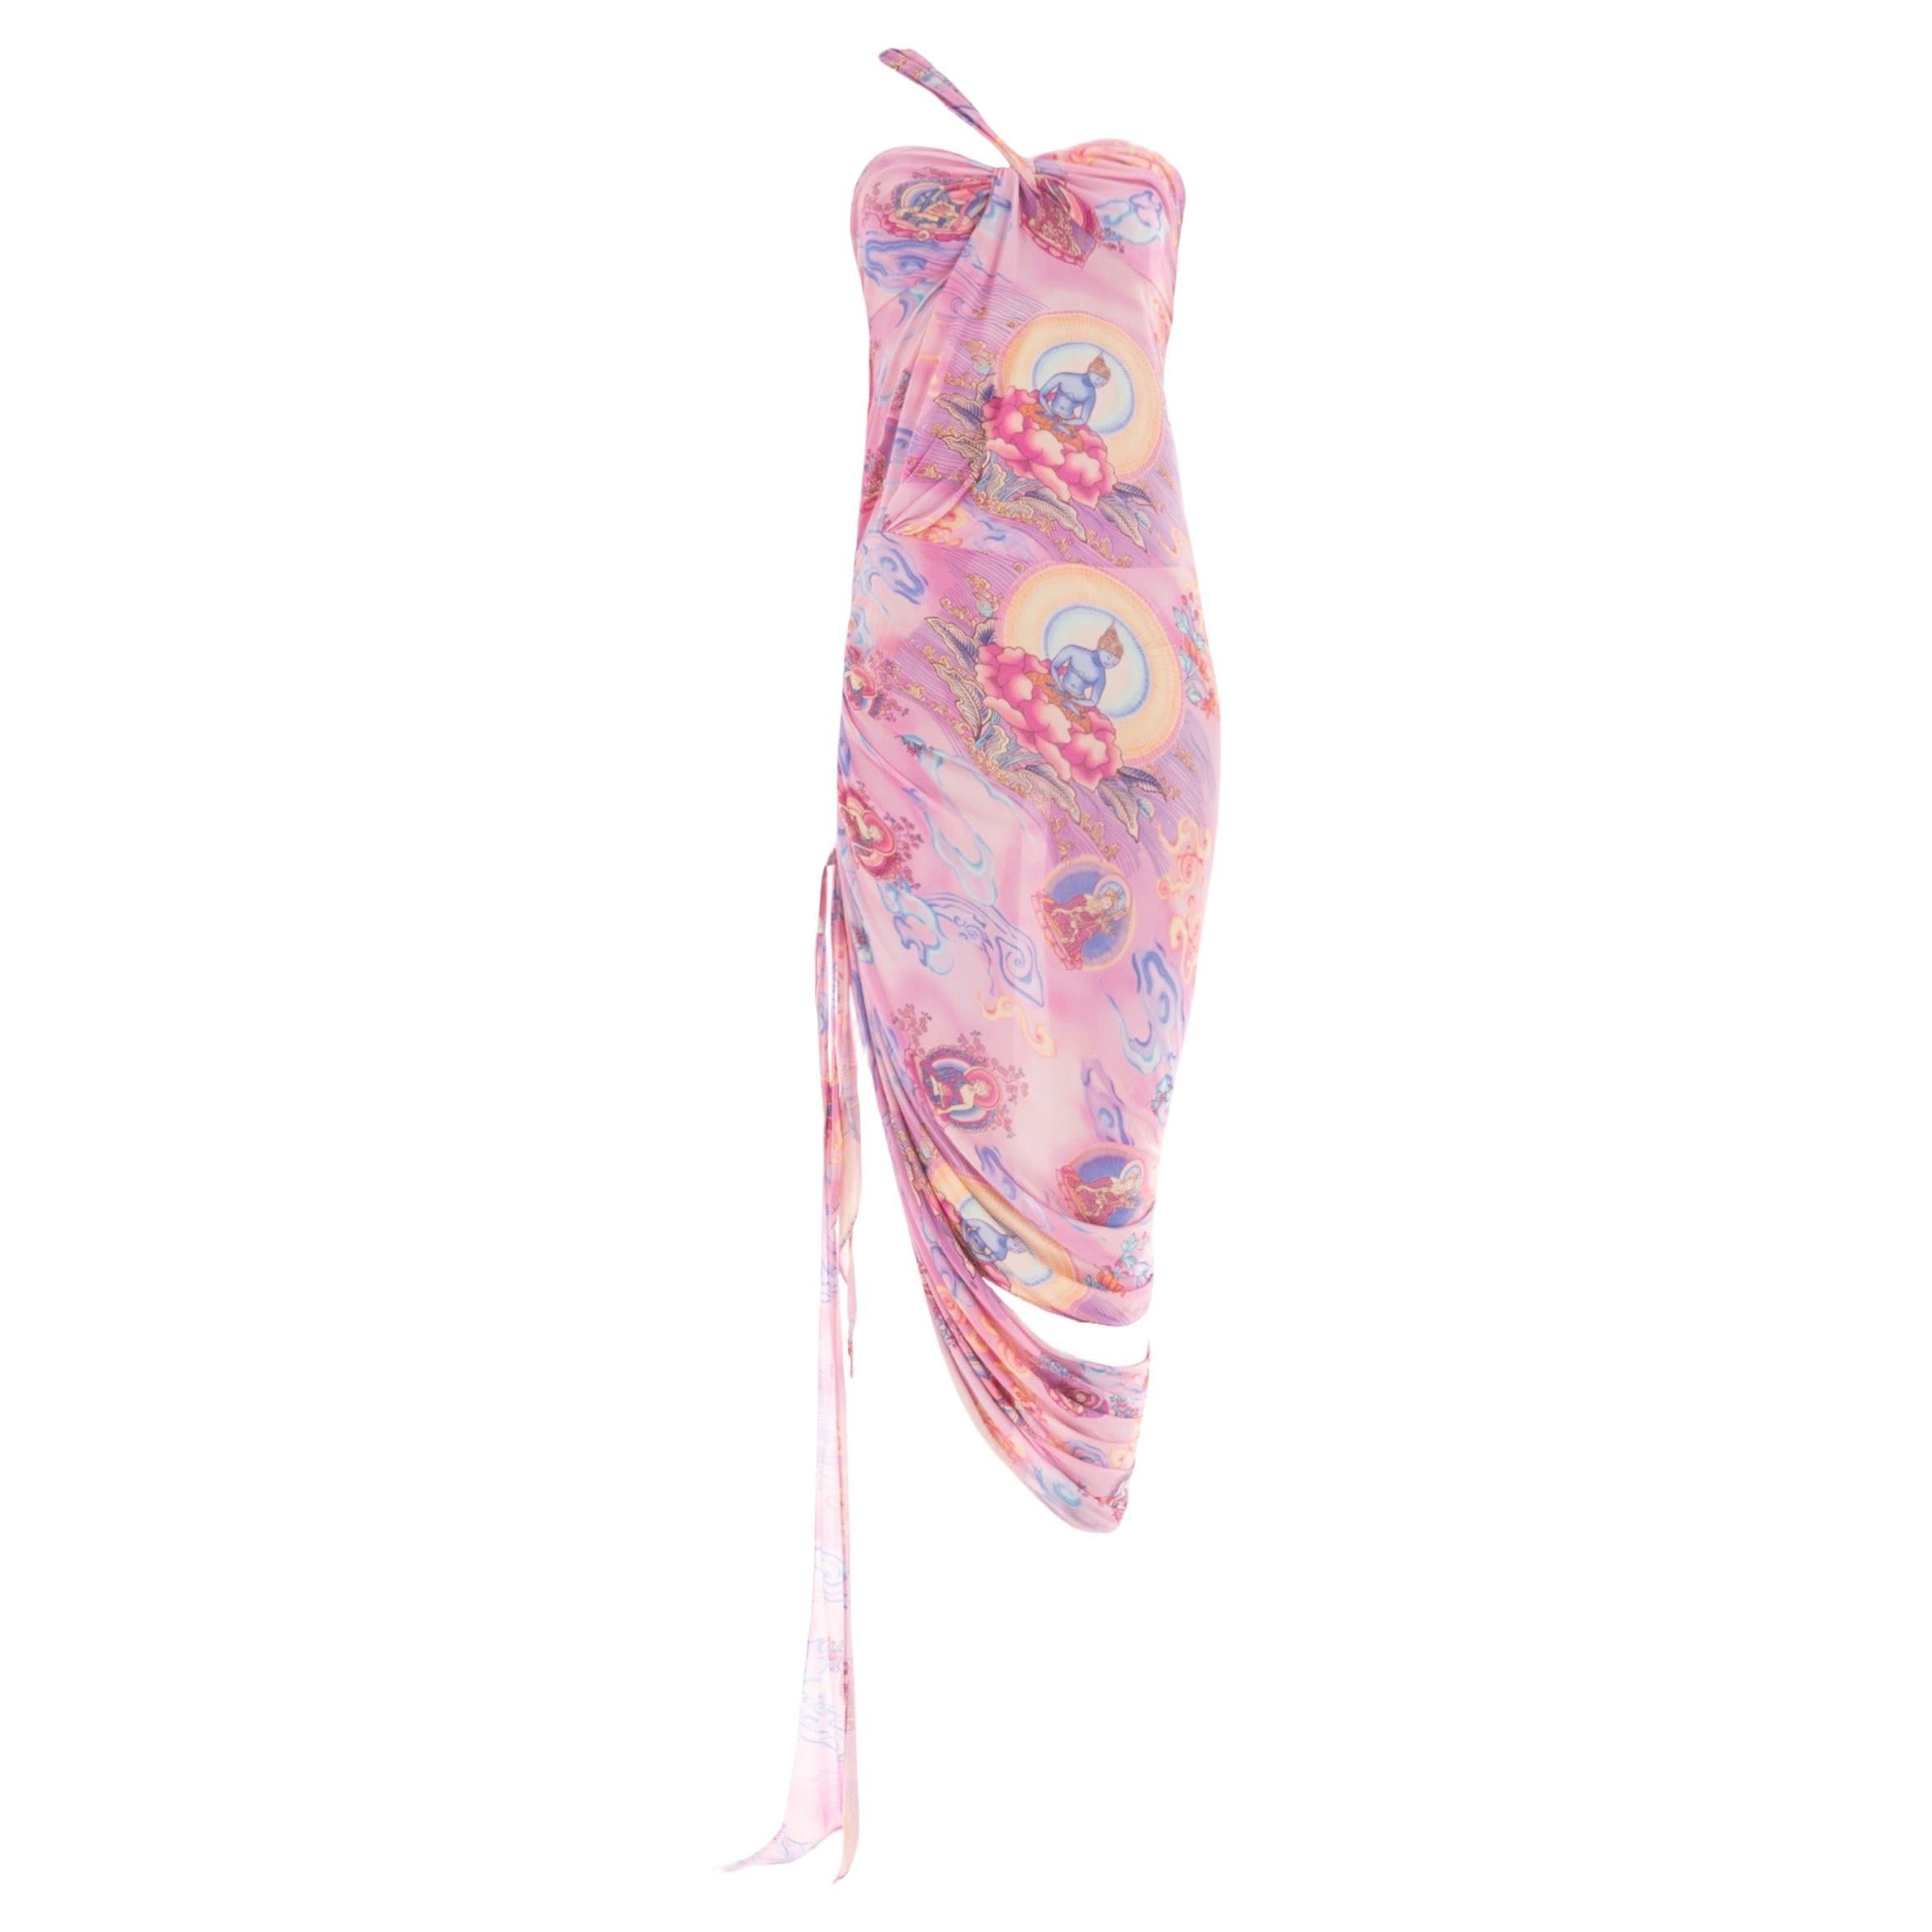 Emanuel Ungaro S/S 2004 pink “Shiva” print draped cut-out dress For Sale